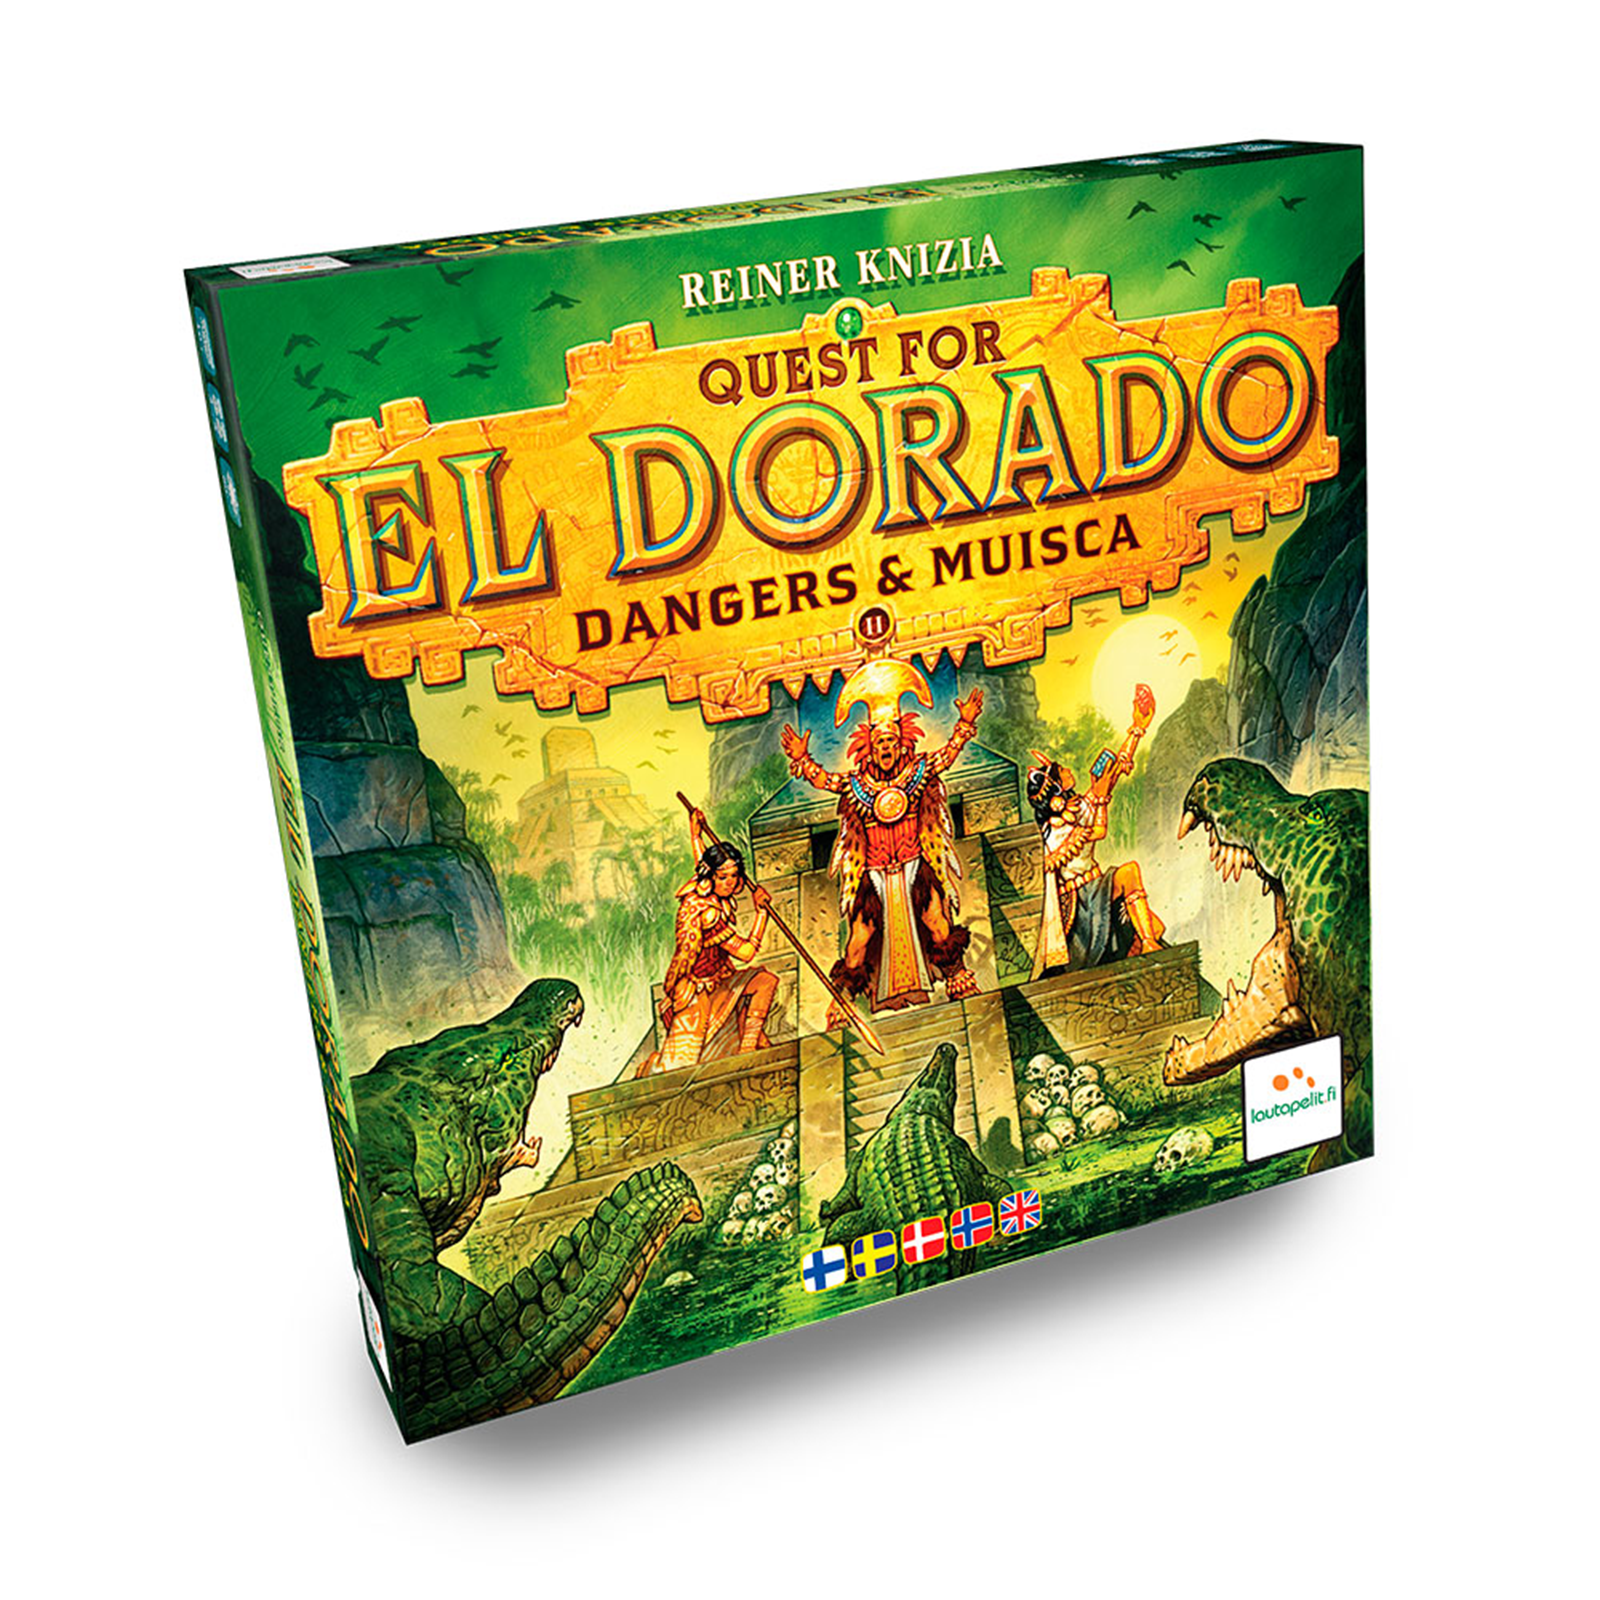 Quest for El Dorado - Dangers & Musica